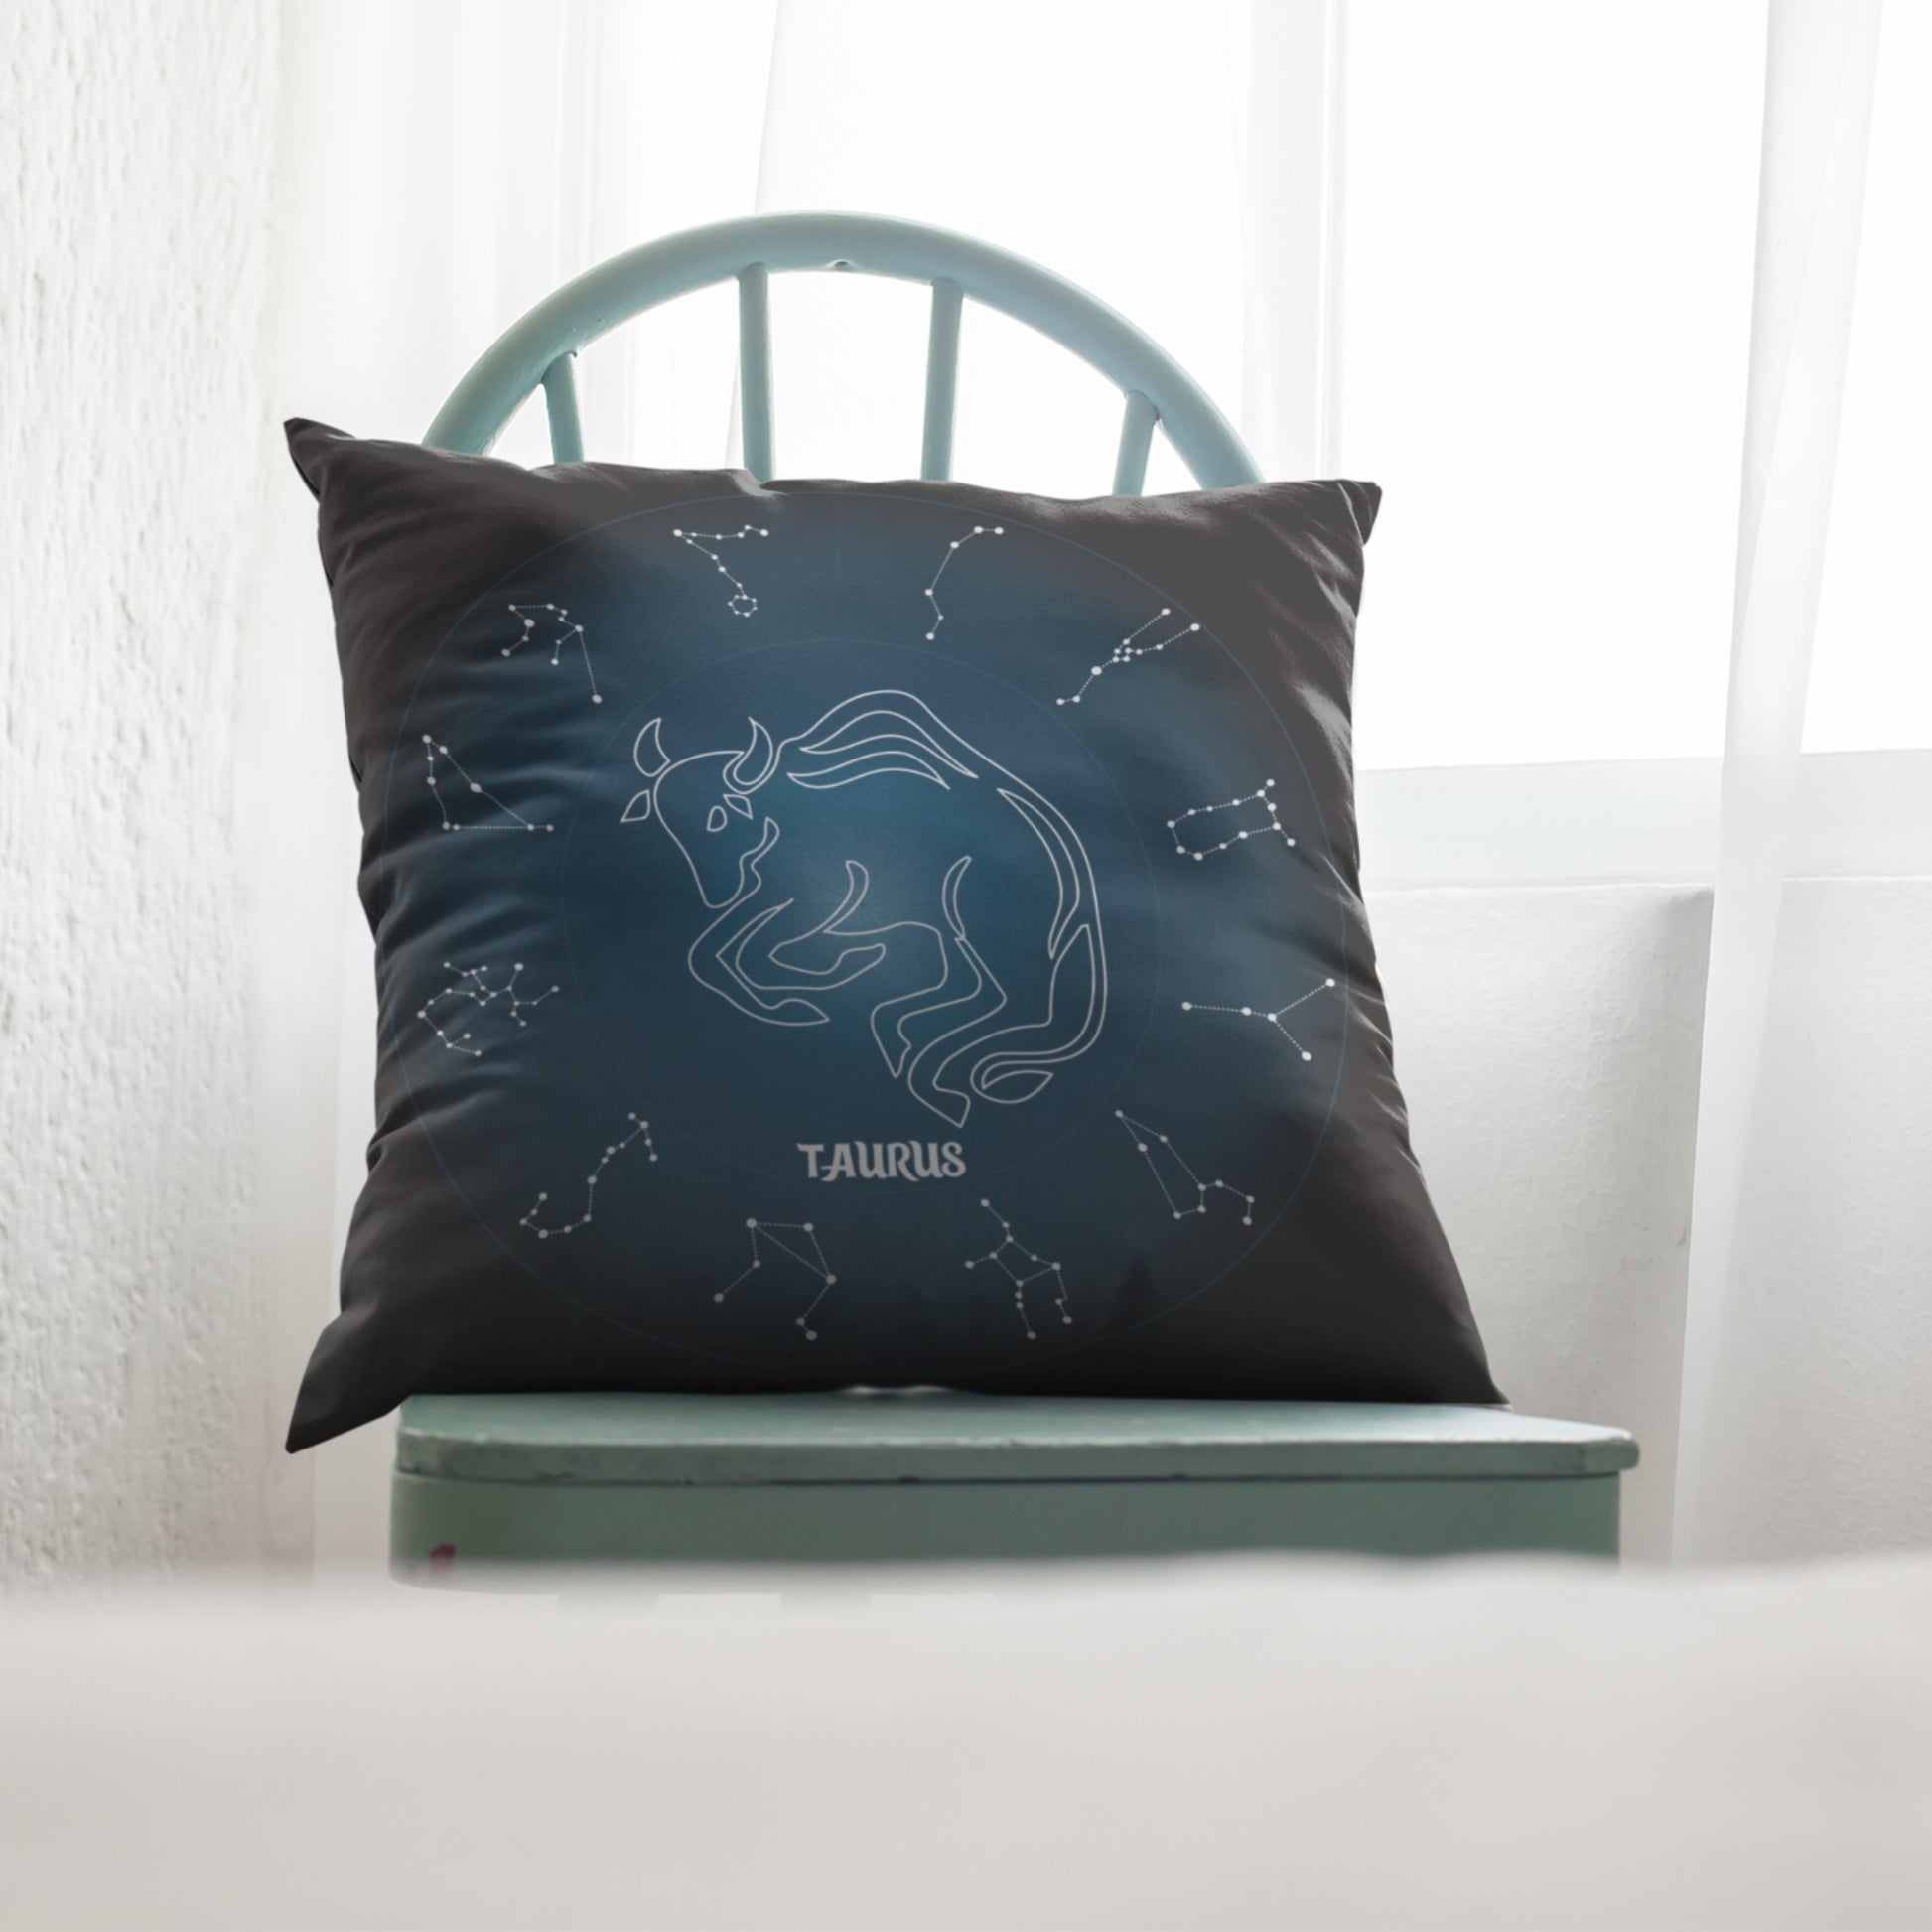 Zodiac-inspired Taurus Throw Pillow